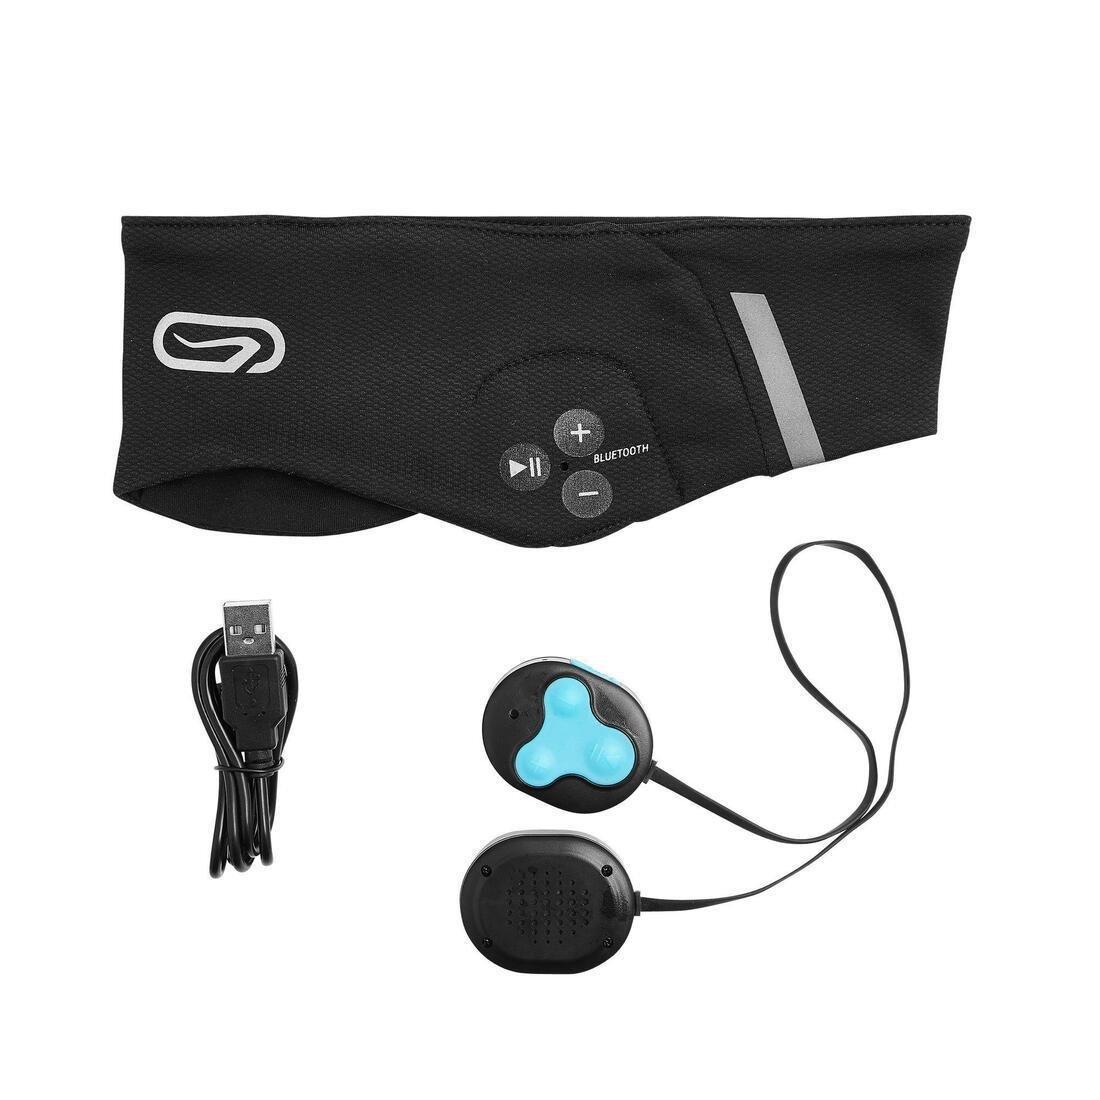 KALENJI - Kalenji Hb 500 Wireless Bluetooth Music Running Headband, Black